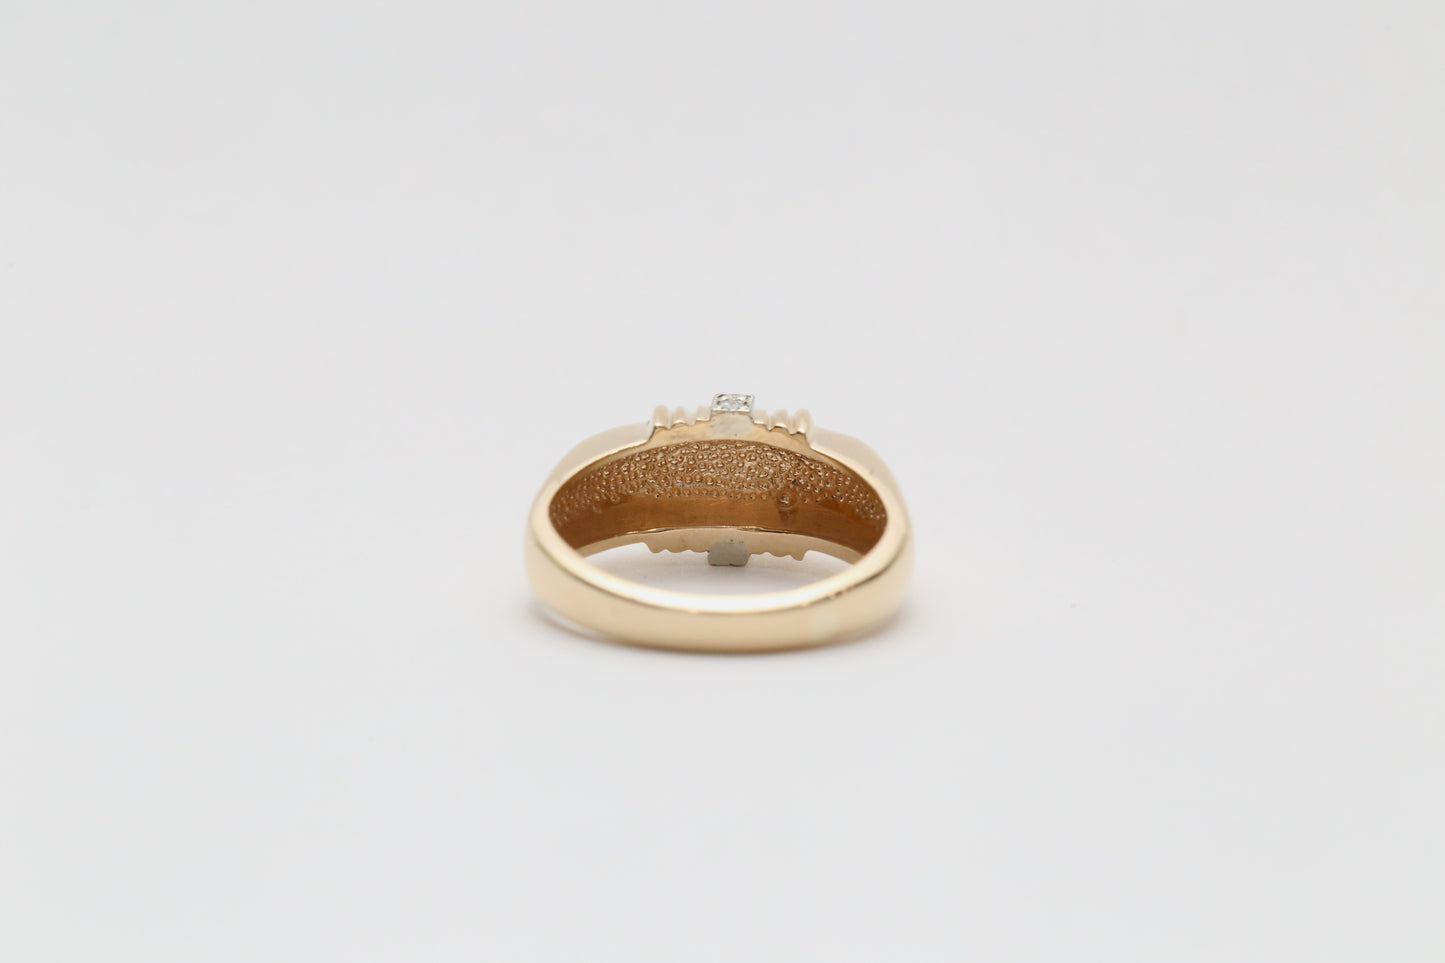 14k Yellow Gold Diamond Ring, Size 7.5 - 7.3g